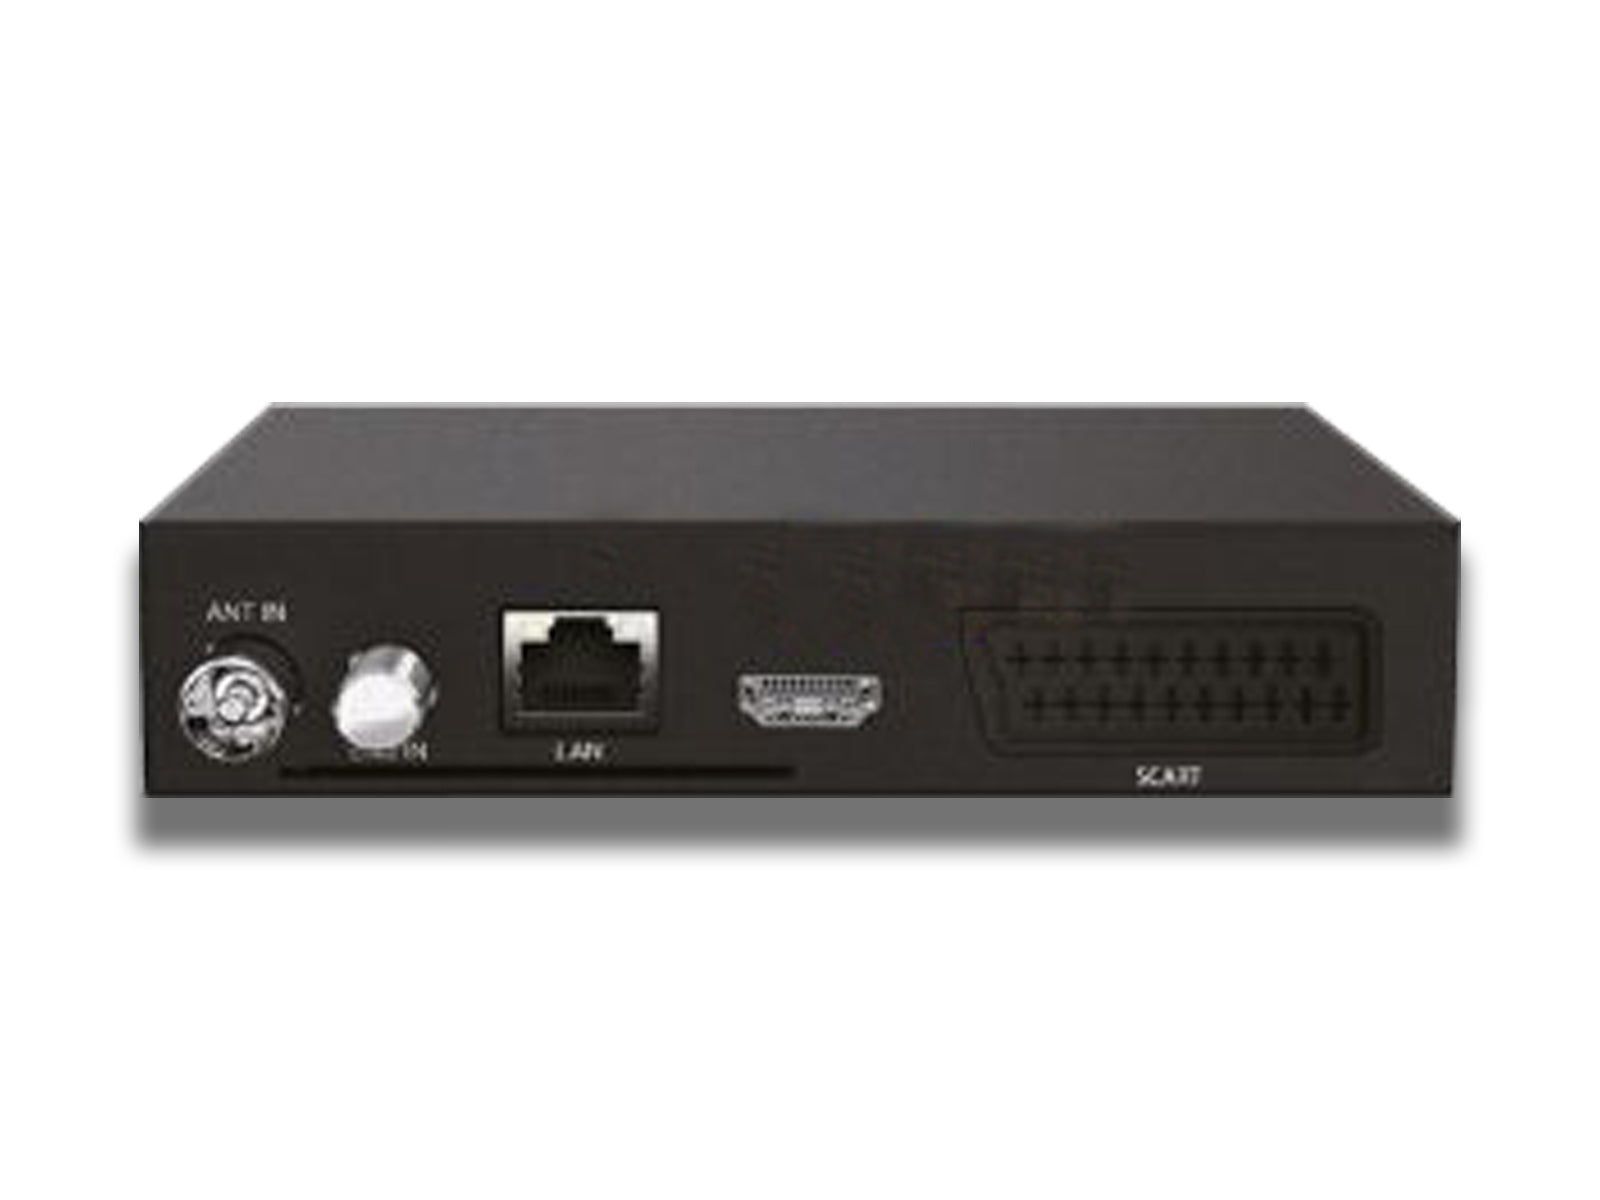 EDISION Picco T265 Dvb-t2 Receiver HDMI SCART USB SPDIF Black for